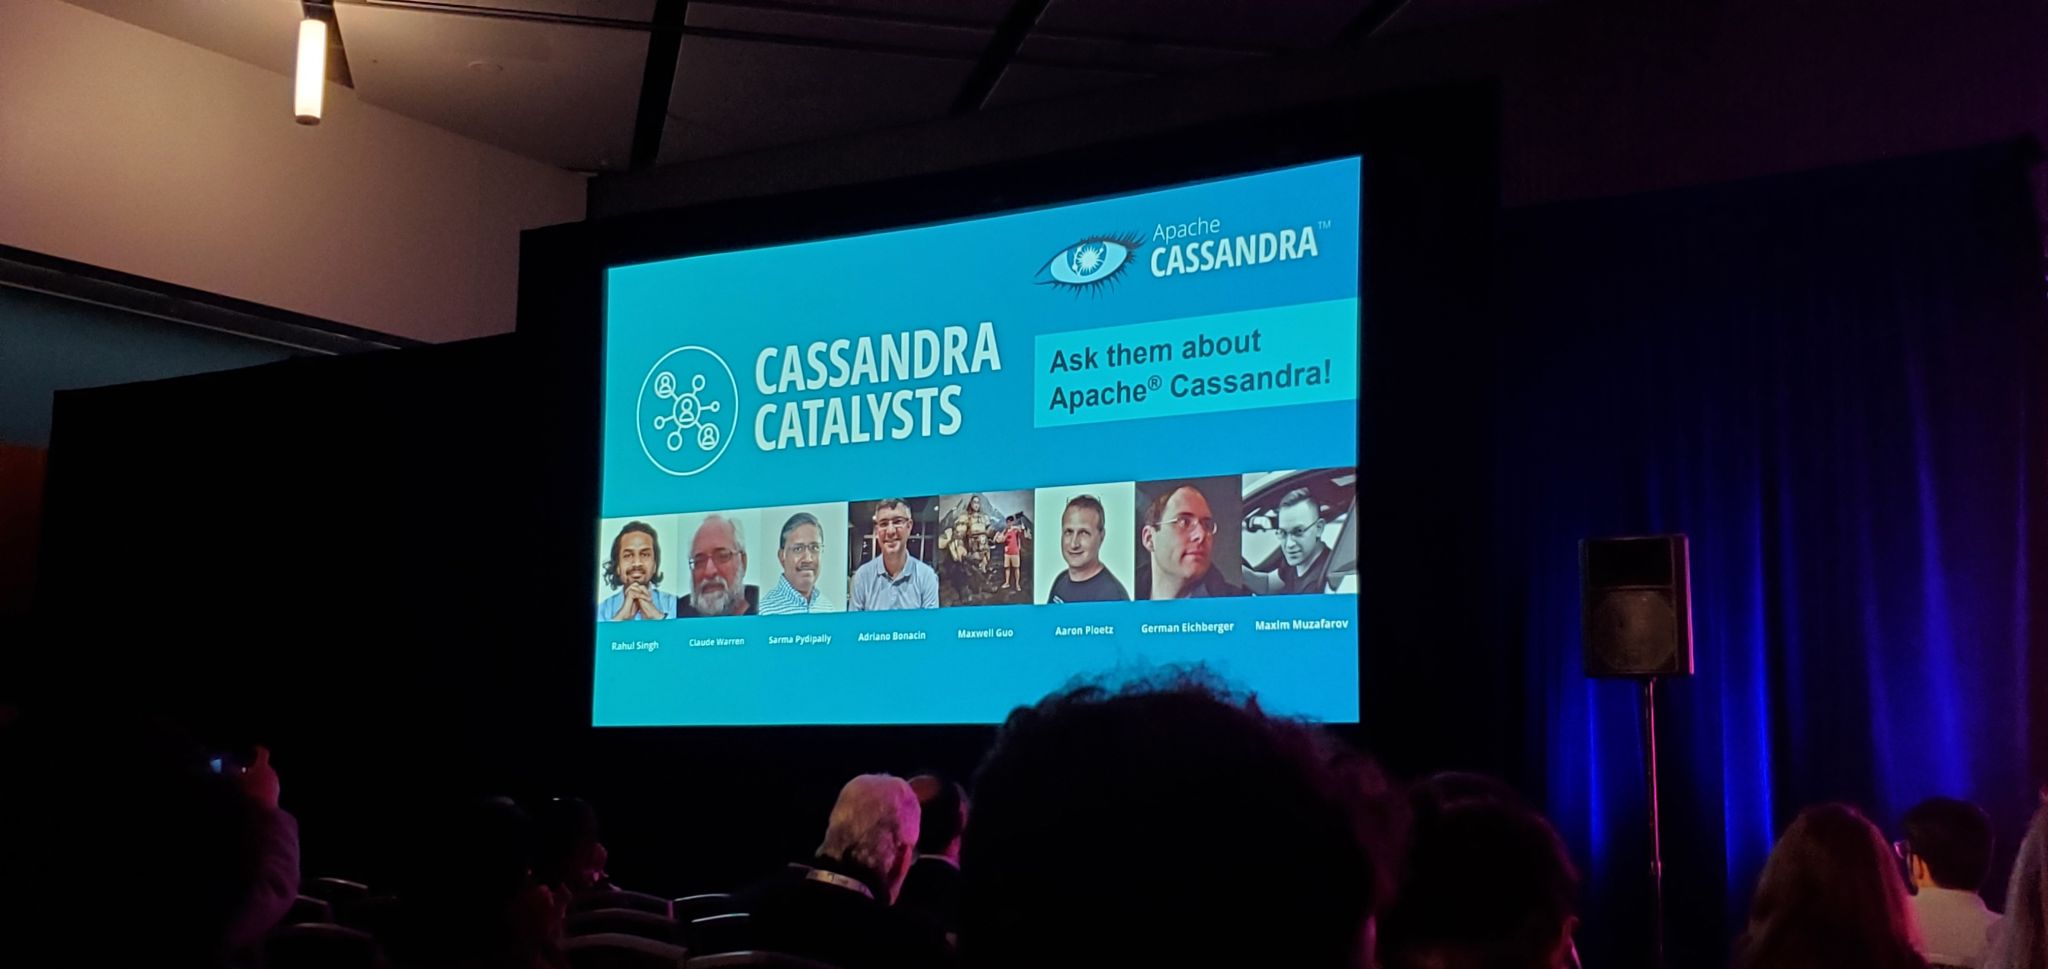 Azure Engineer Nominated for Cassandra Catalyst Program